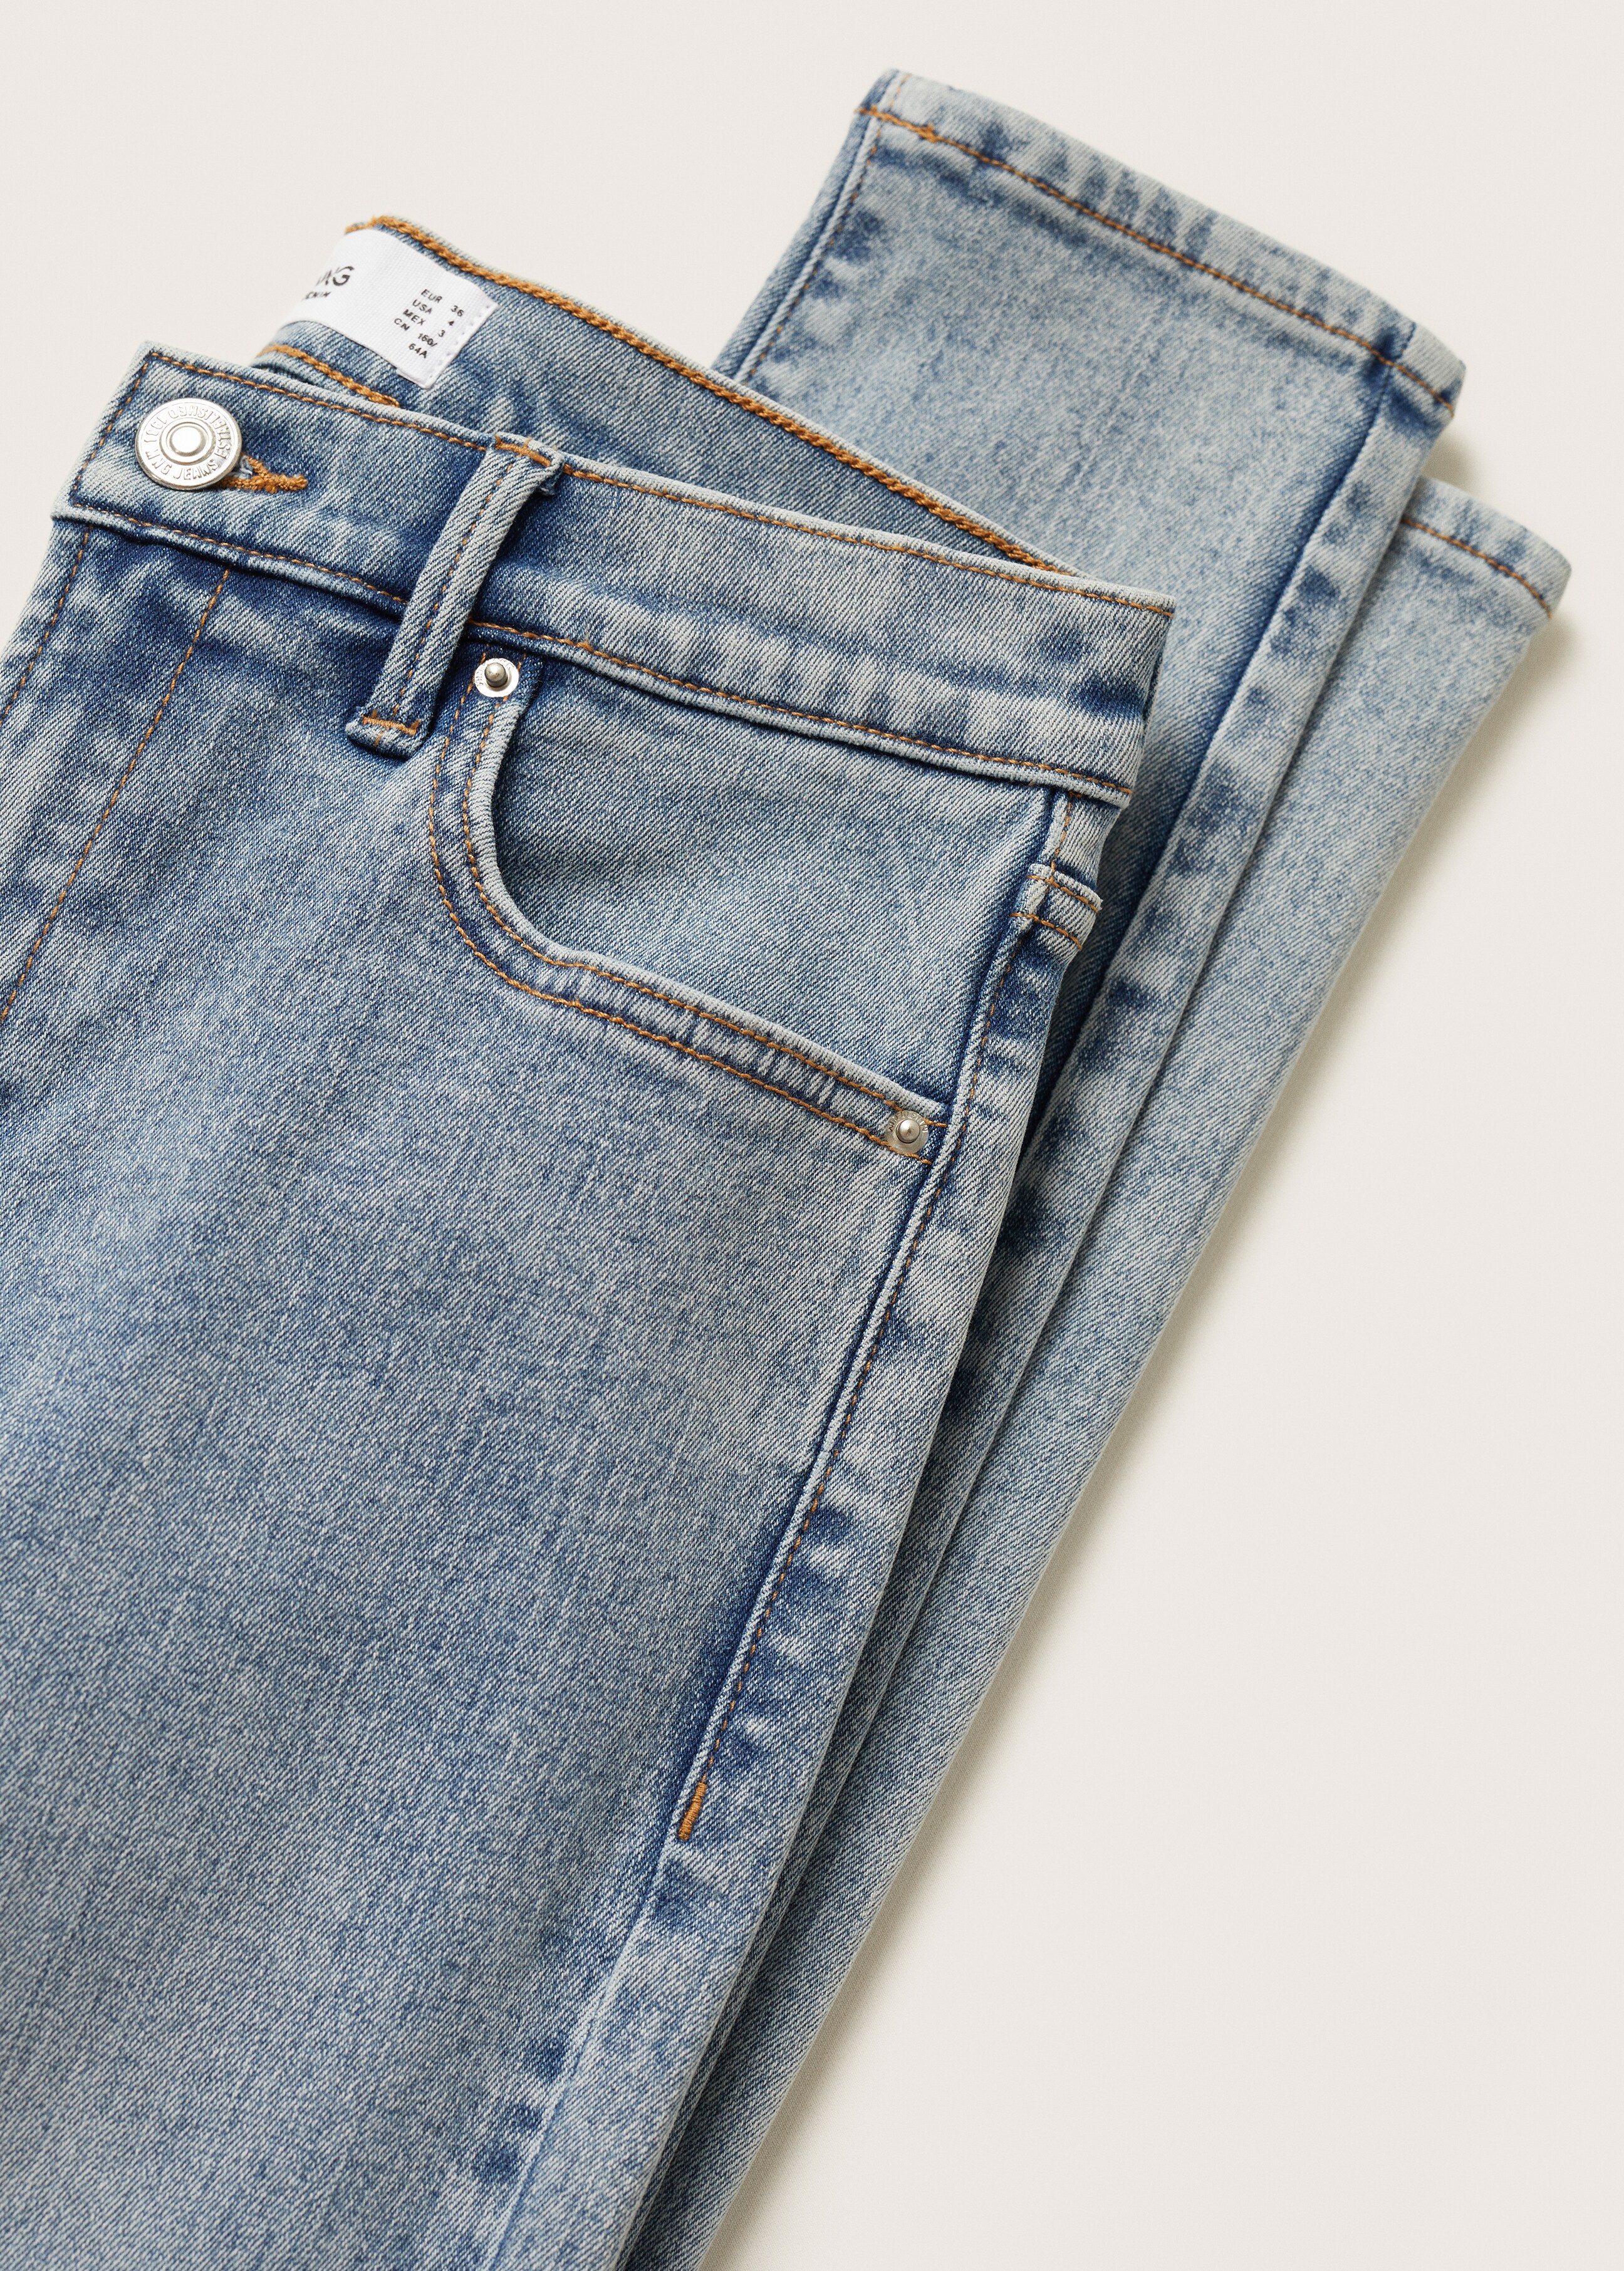 Elsa medium-waist skinny jeans - Details of the article 8